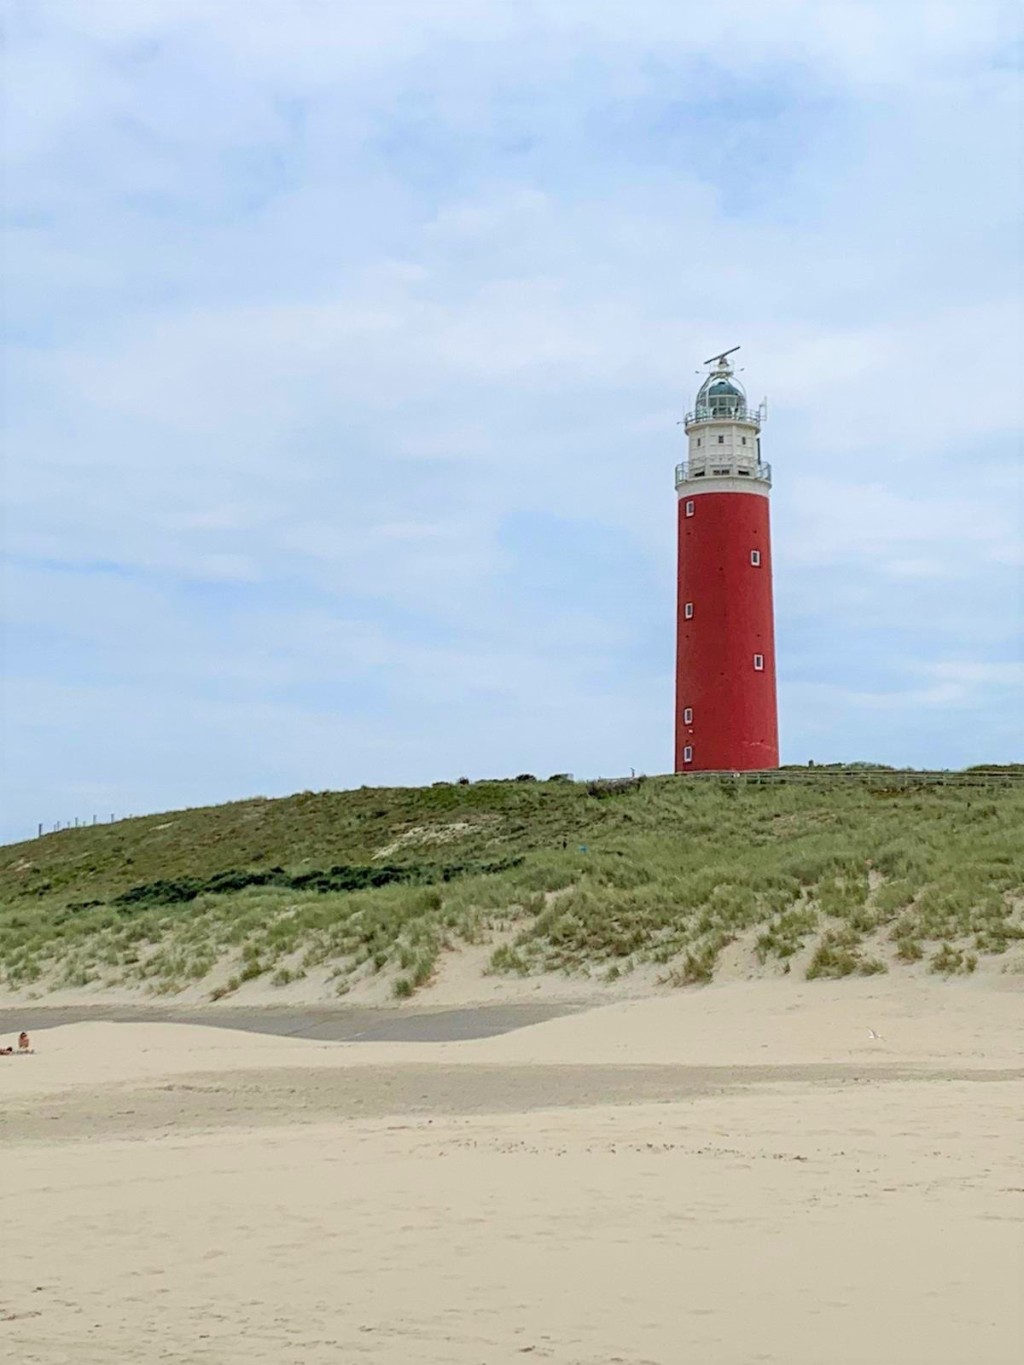 My weekend trip to Texel island